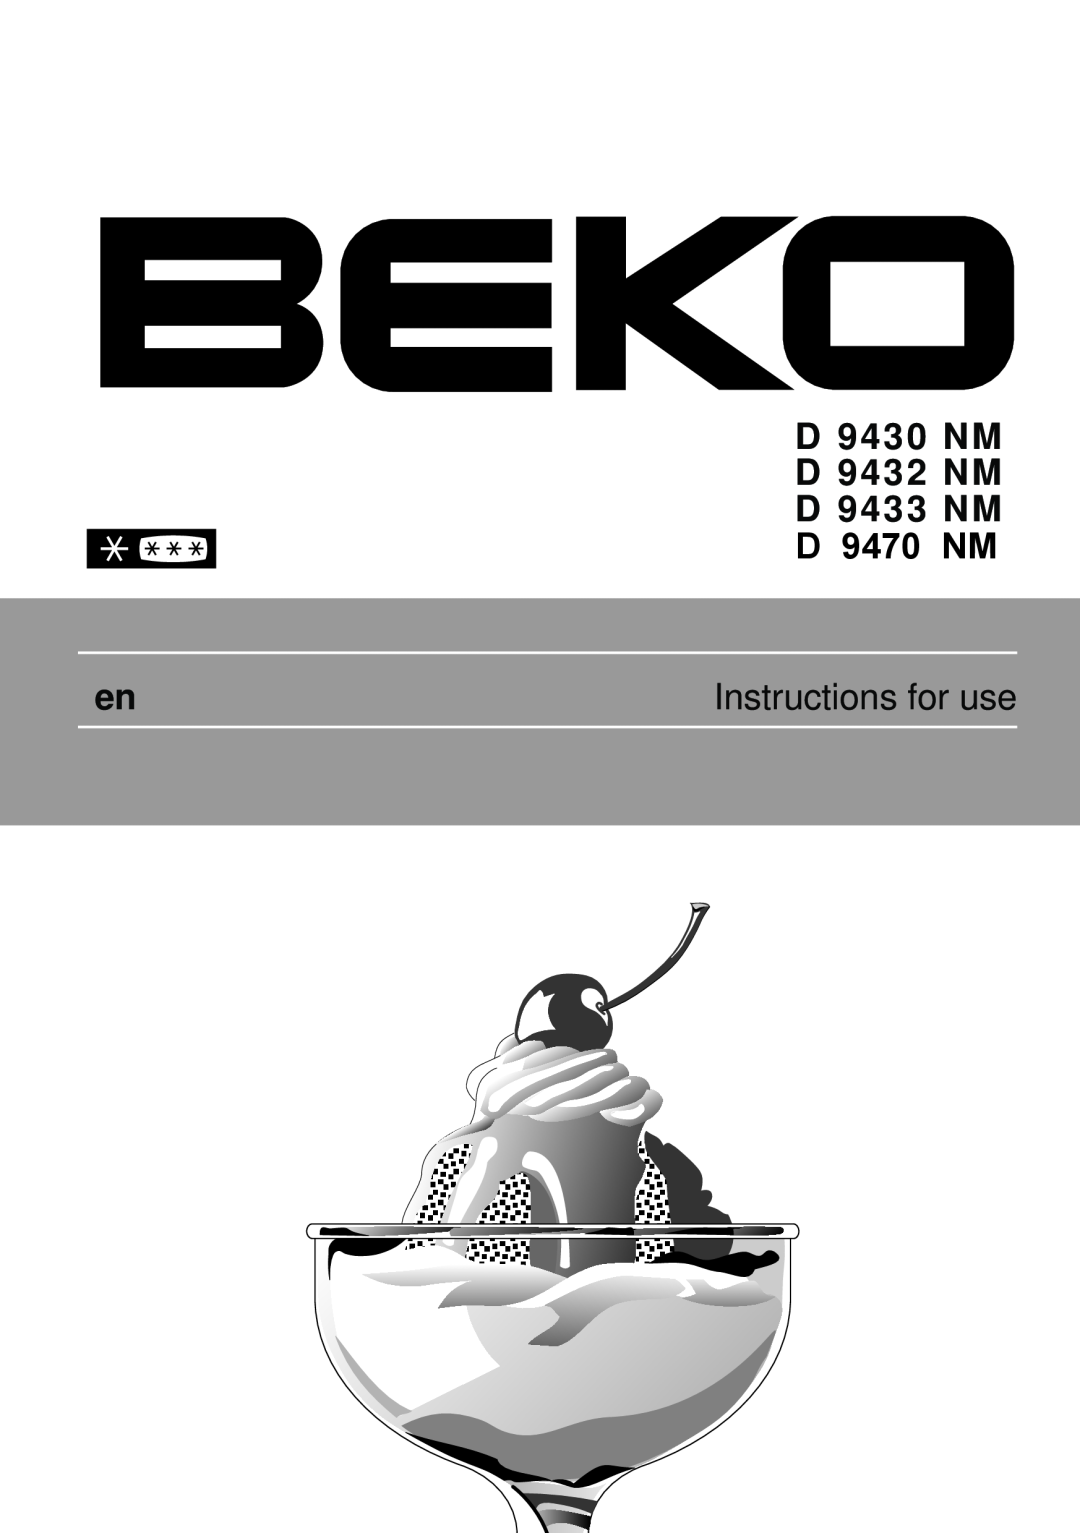 Beko D 9470 NM manual D 9430 NM D 9432 NM D 9433 NM, Instructions for use 